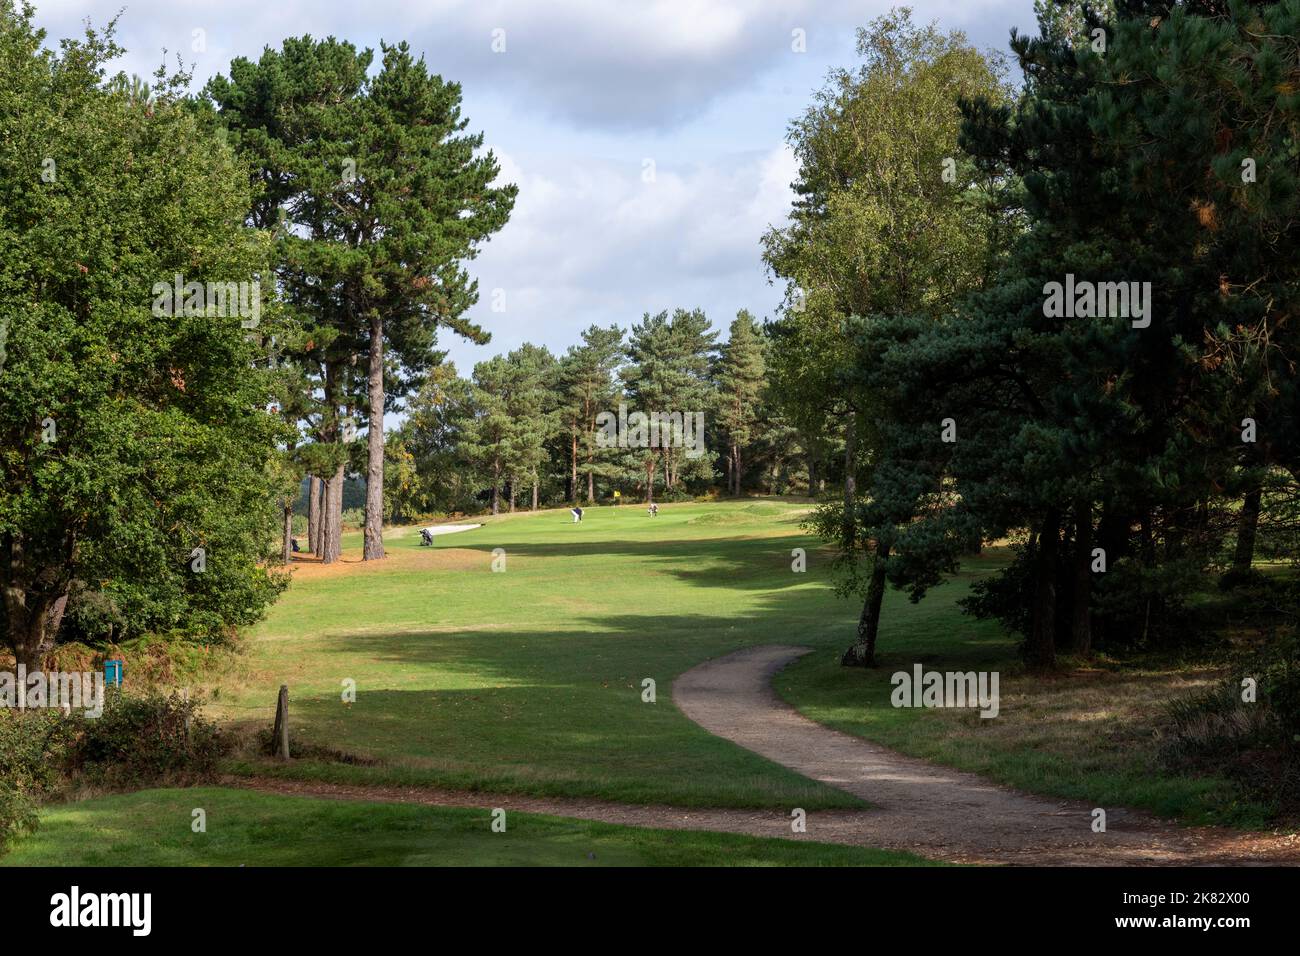 3rd hole at Knighton Heath Golf Club showing fairway and green in the distance, Knighton Heath Golf Club, Bournemouth, Dorset, England, UK Stock Photo